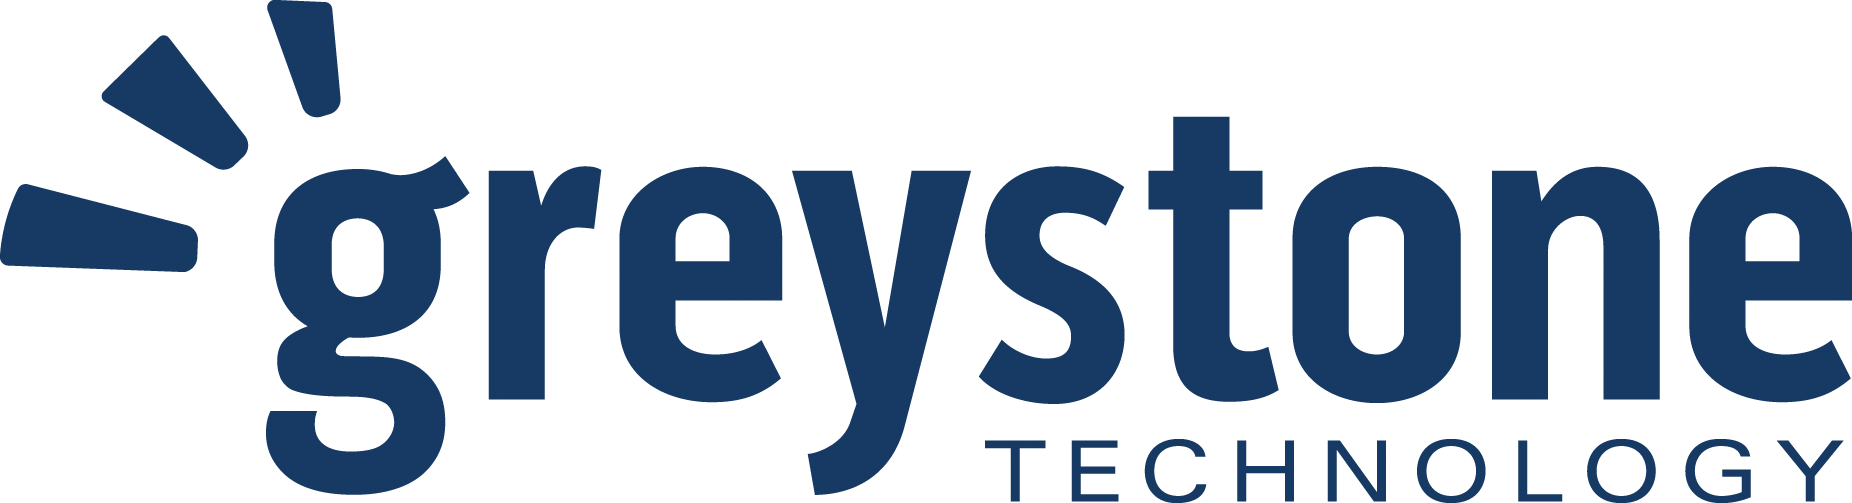 Greystone Technology logo